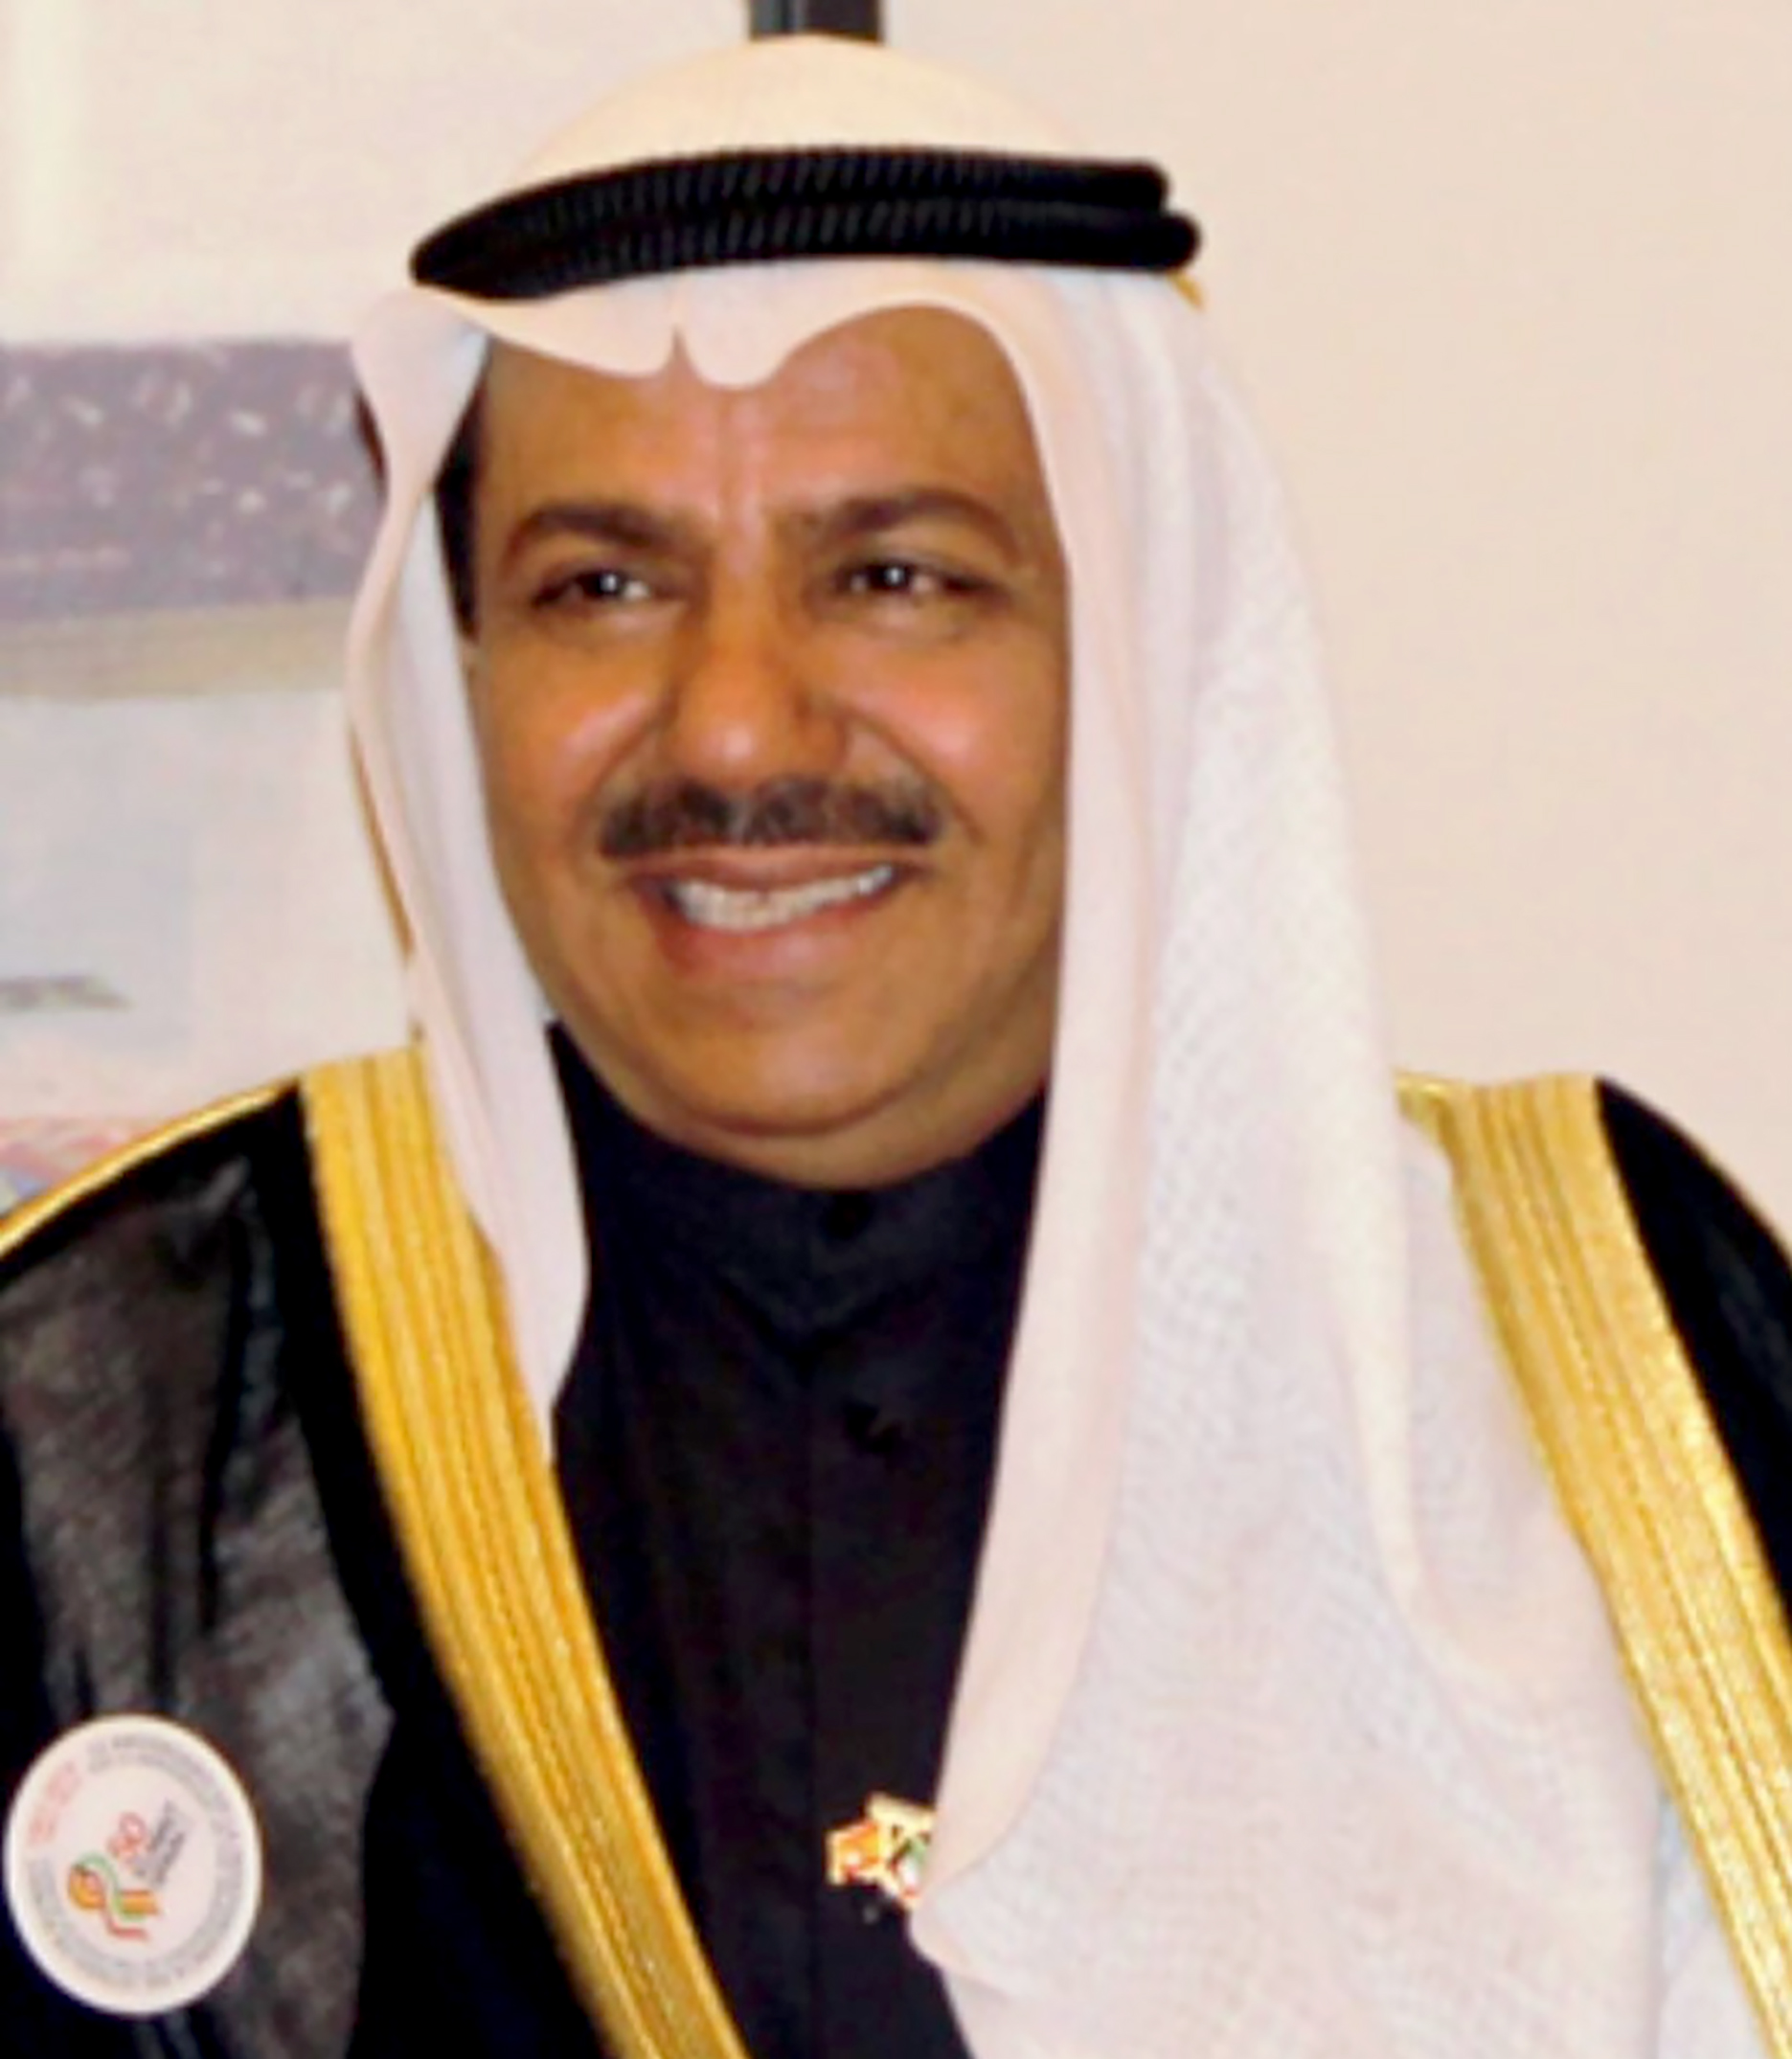 The State of Kuwait Ambassador to Oman Suleiman Al-Harbi